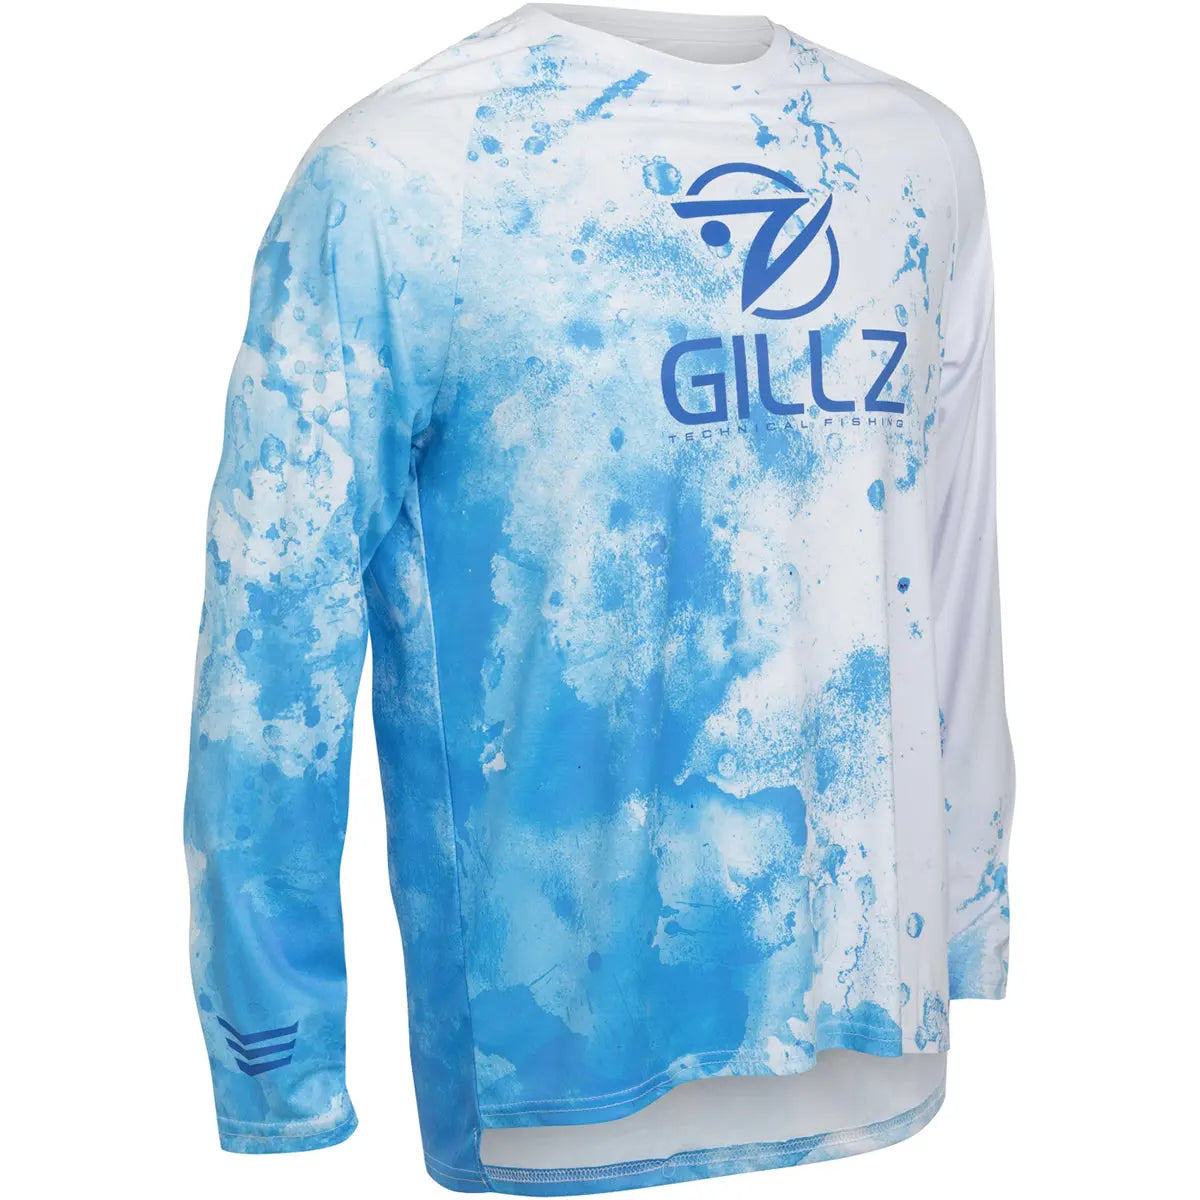 Gillz Contender Series Spray UV Long Sleeve T-Shirt - Powder Blue Gillz